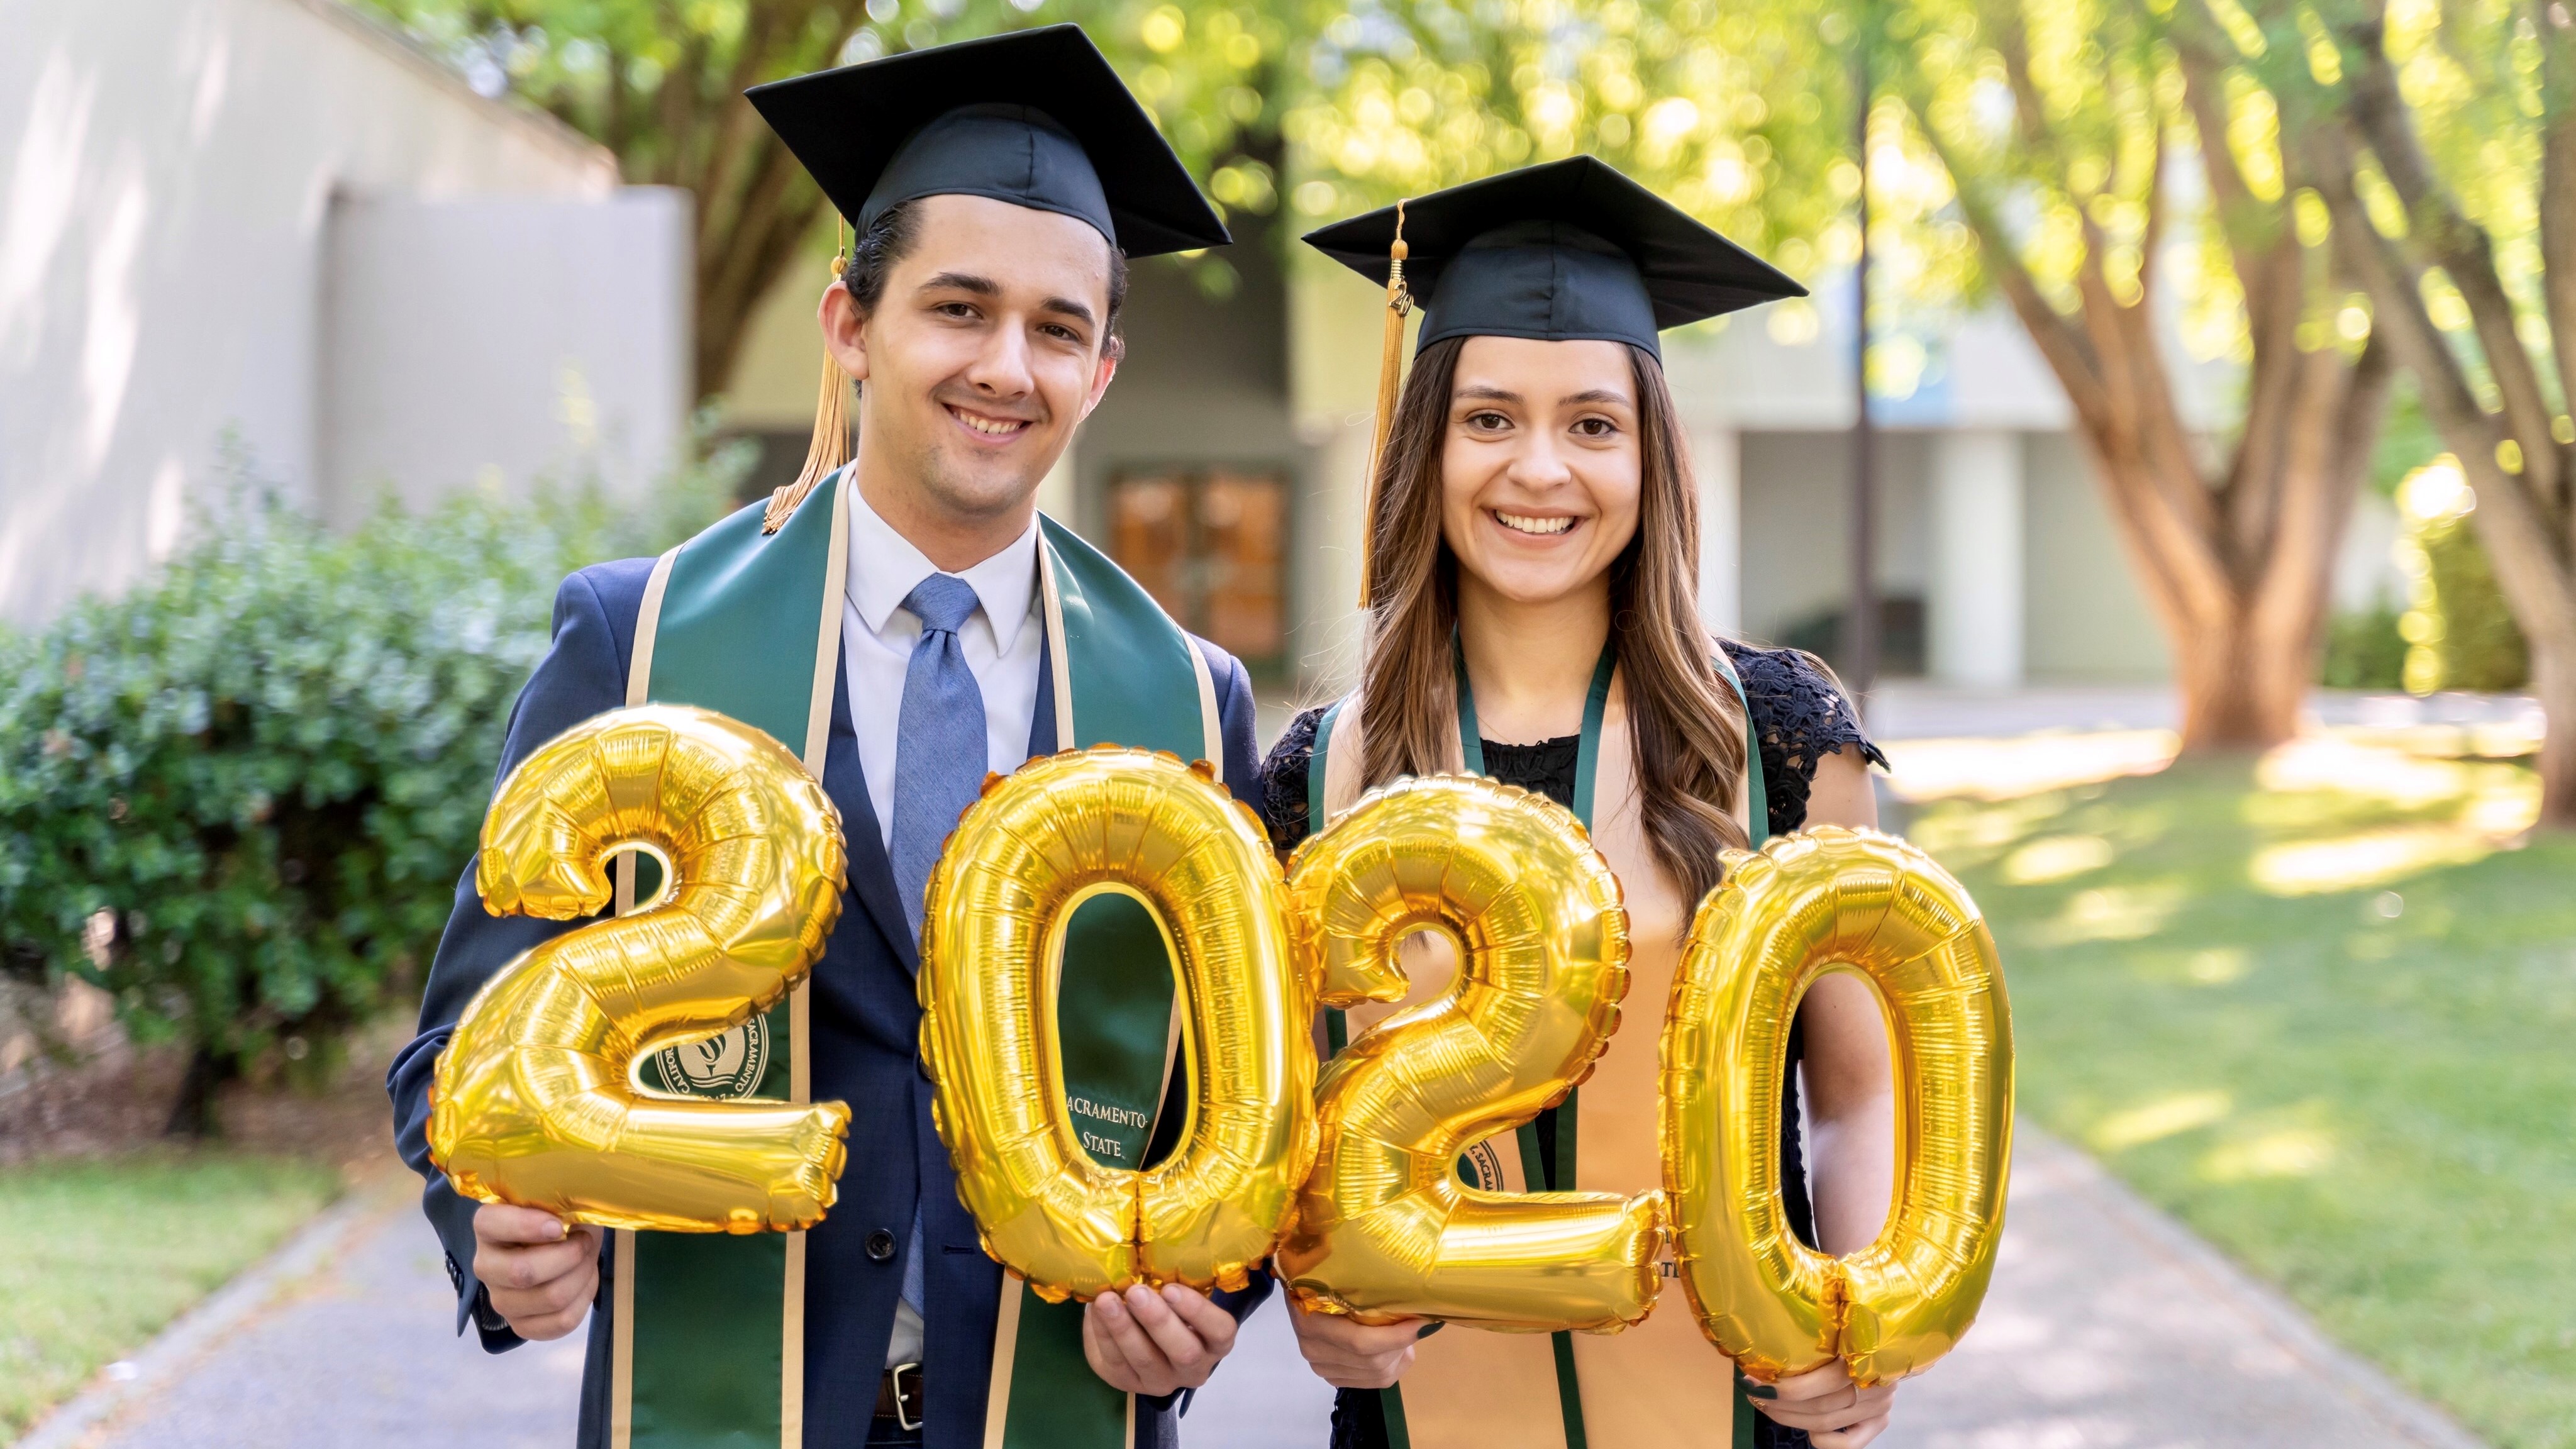 2020 graduates hit their finish line despite hardships